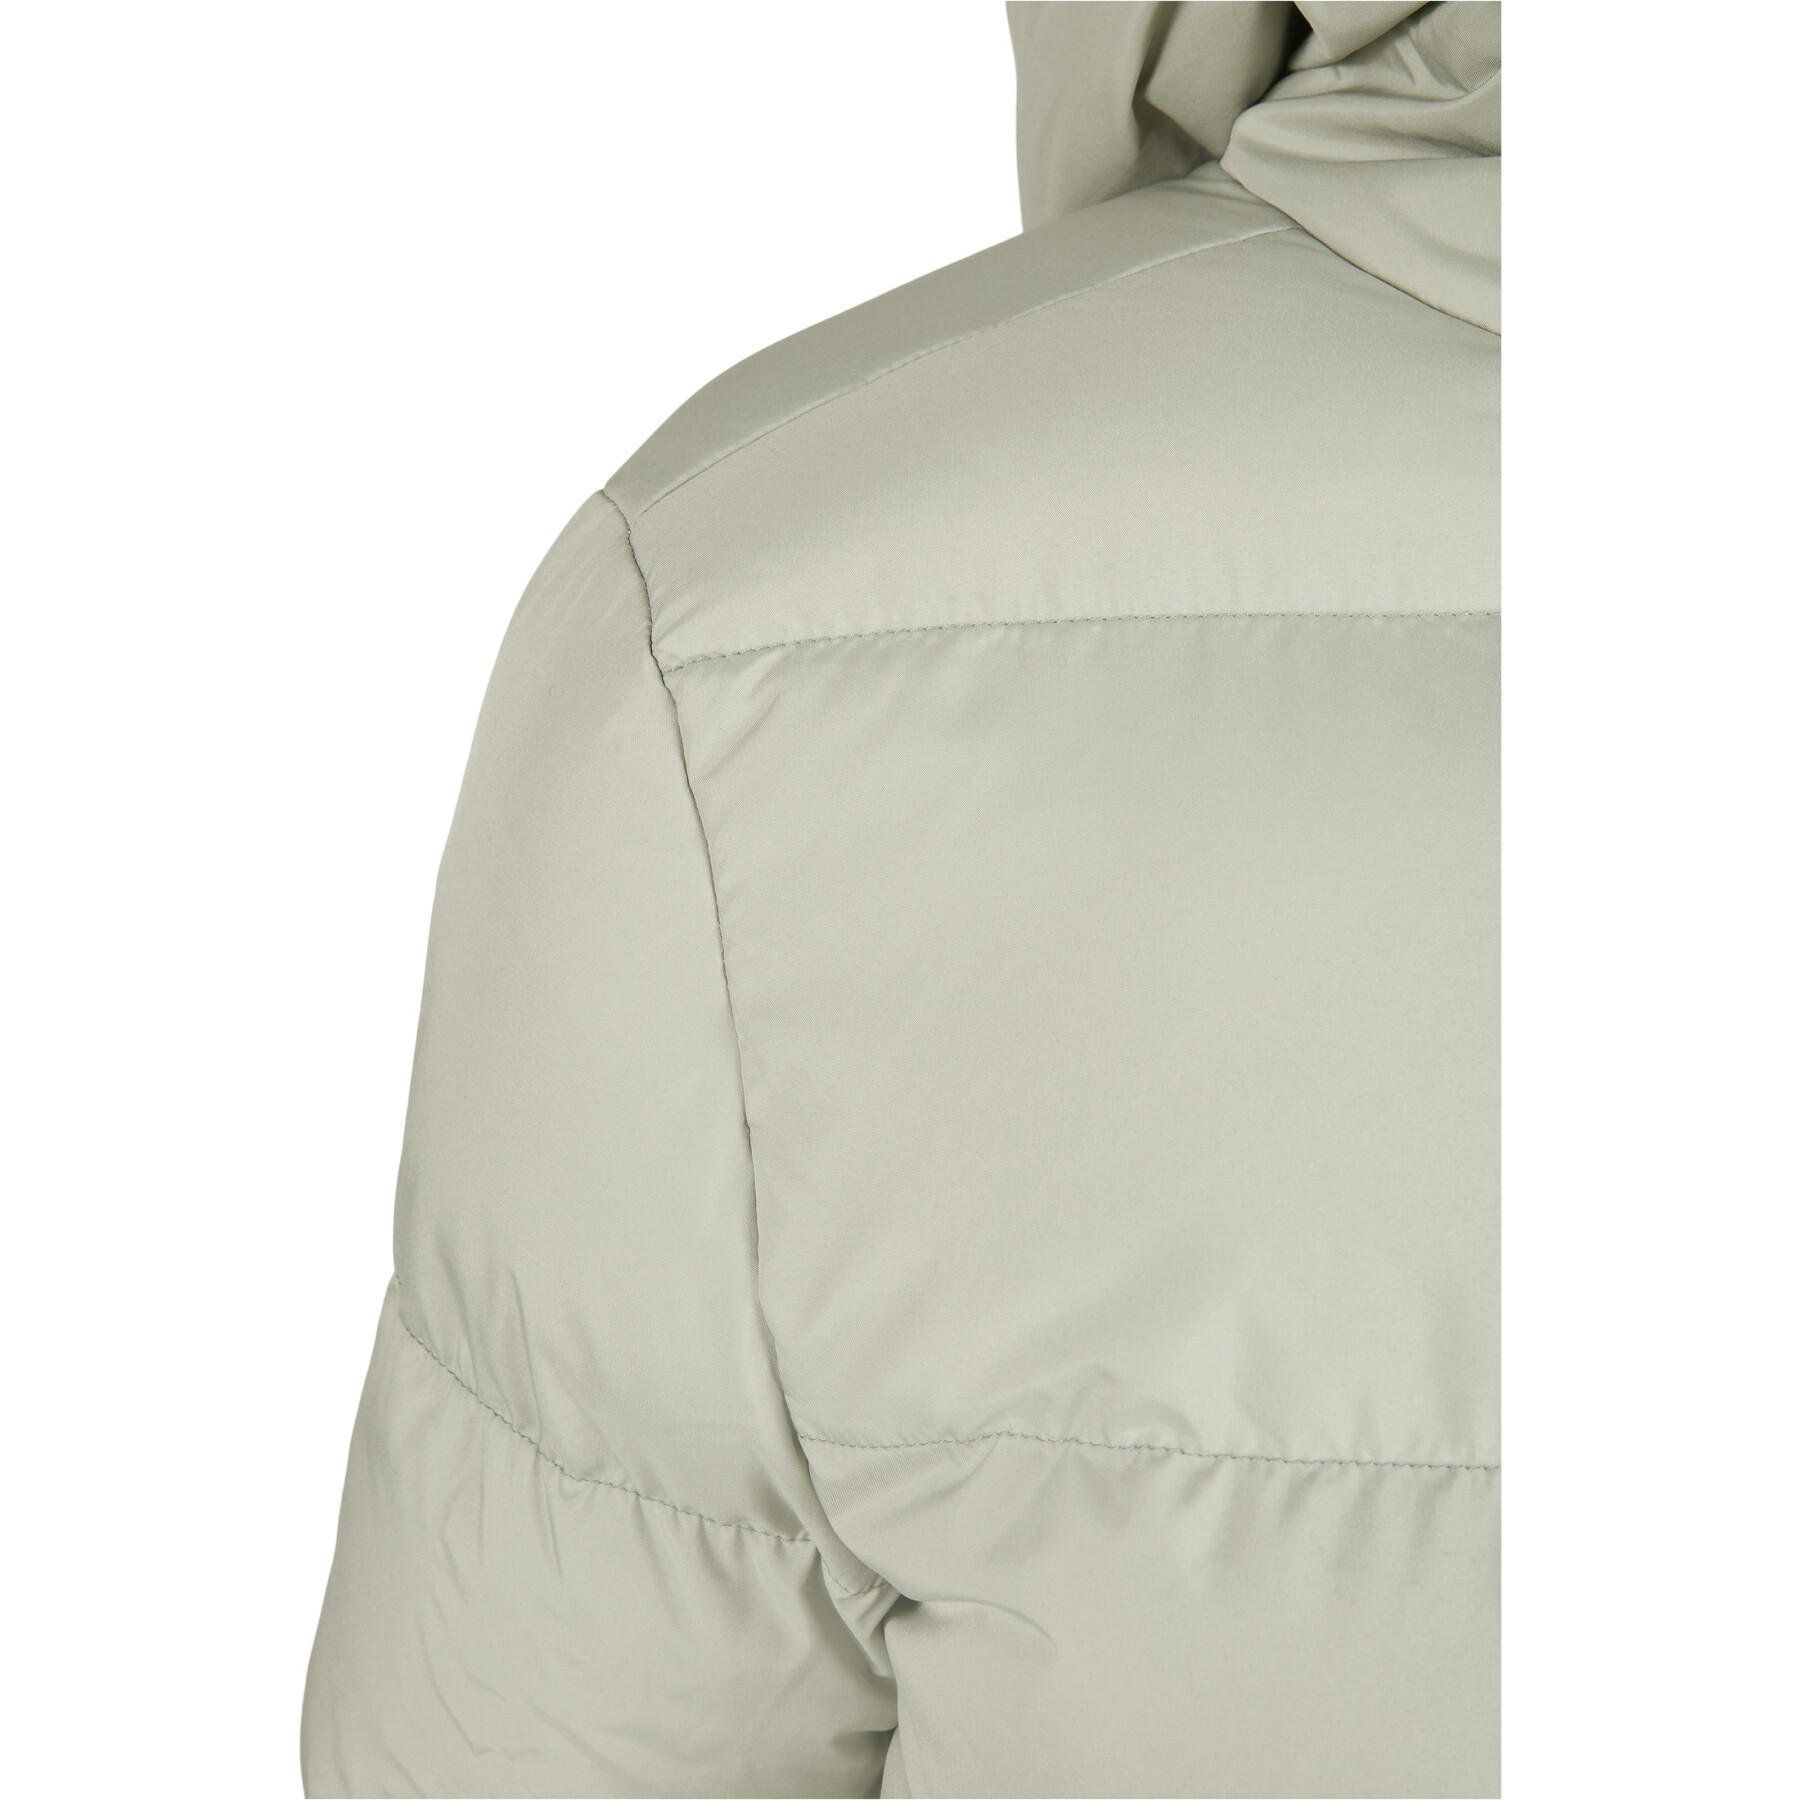 Women's jacket Urban Classics hooded puffer- large sizes